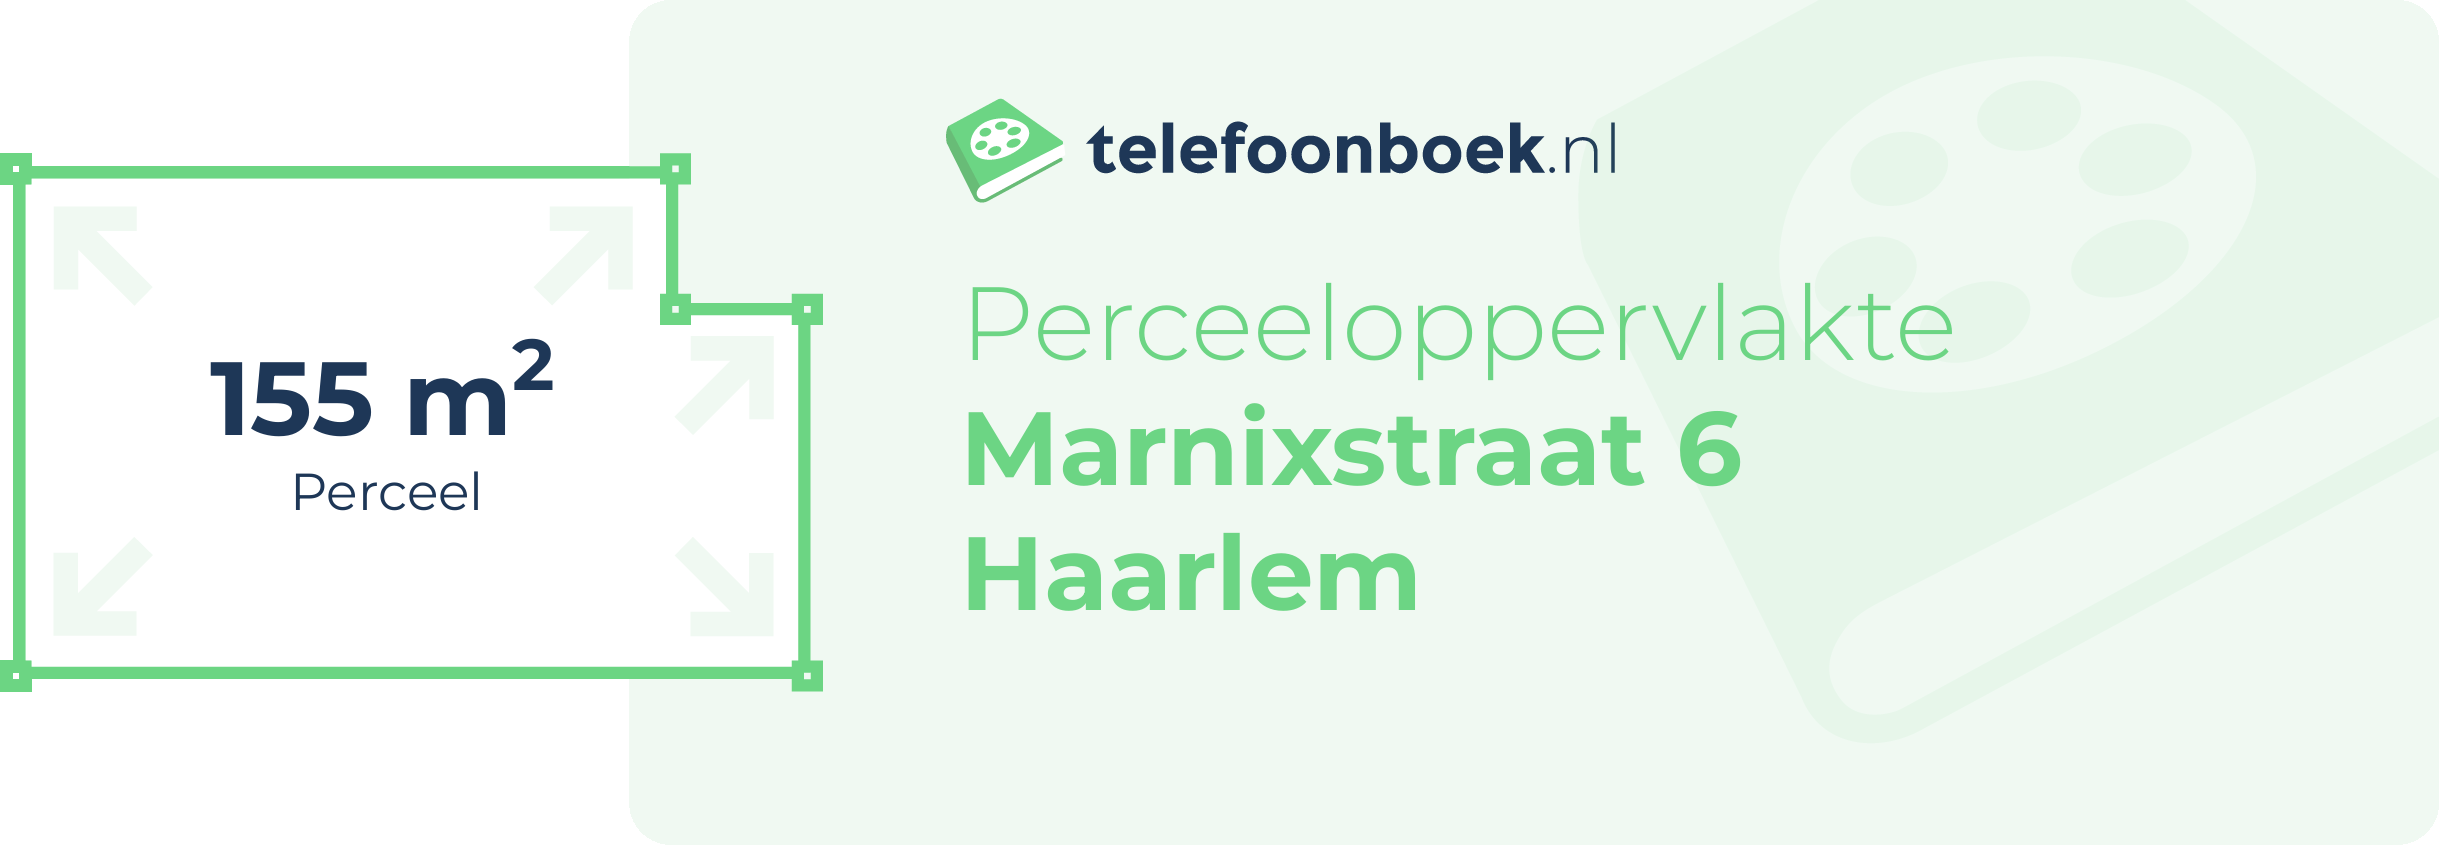 Perceeloppervlakte Marnixstraat 6 Haarlem